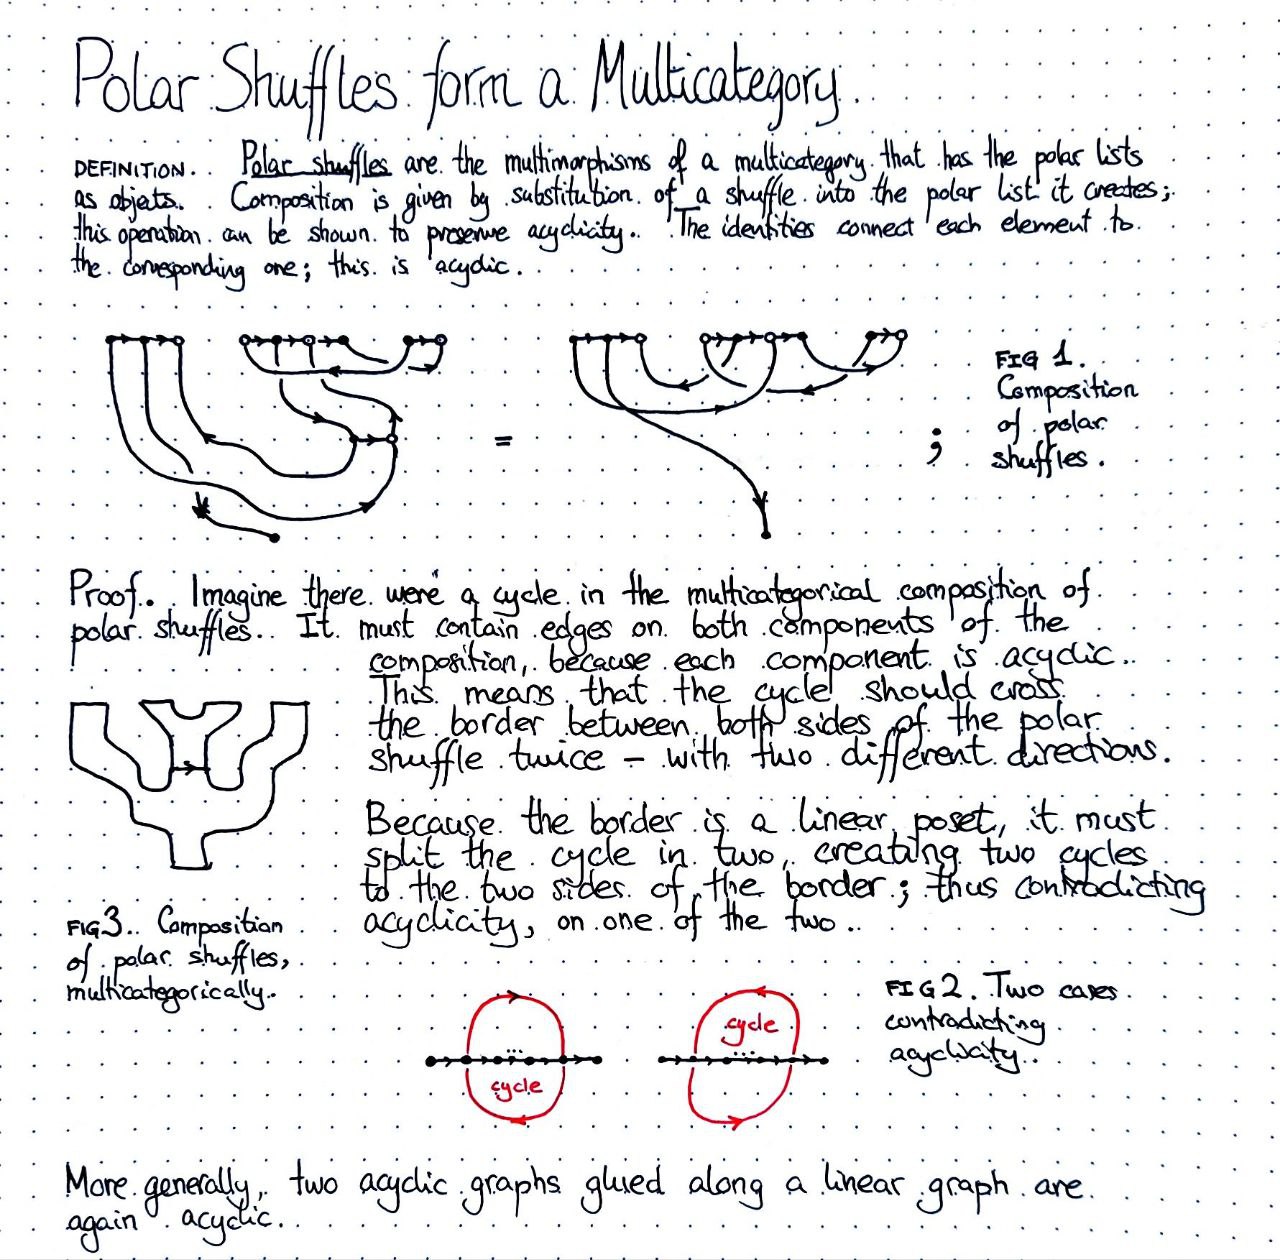 polar-shuffles-form-a-multicategory